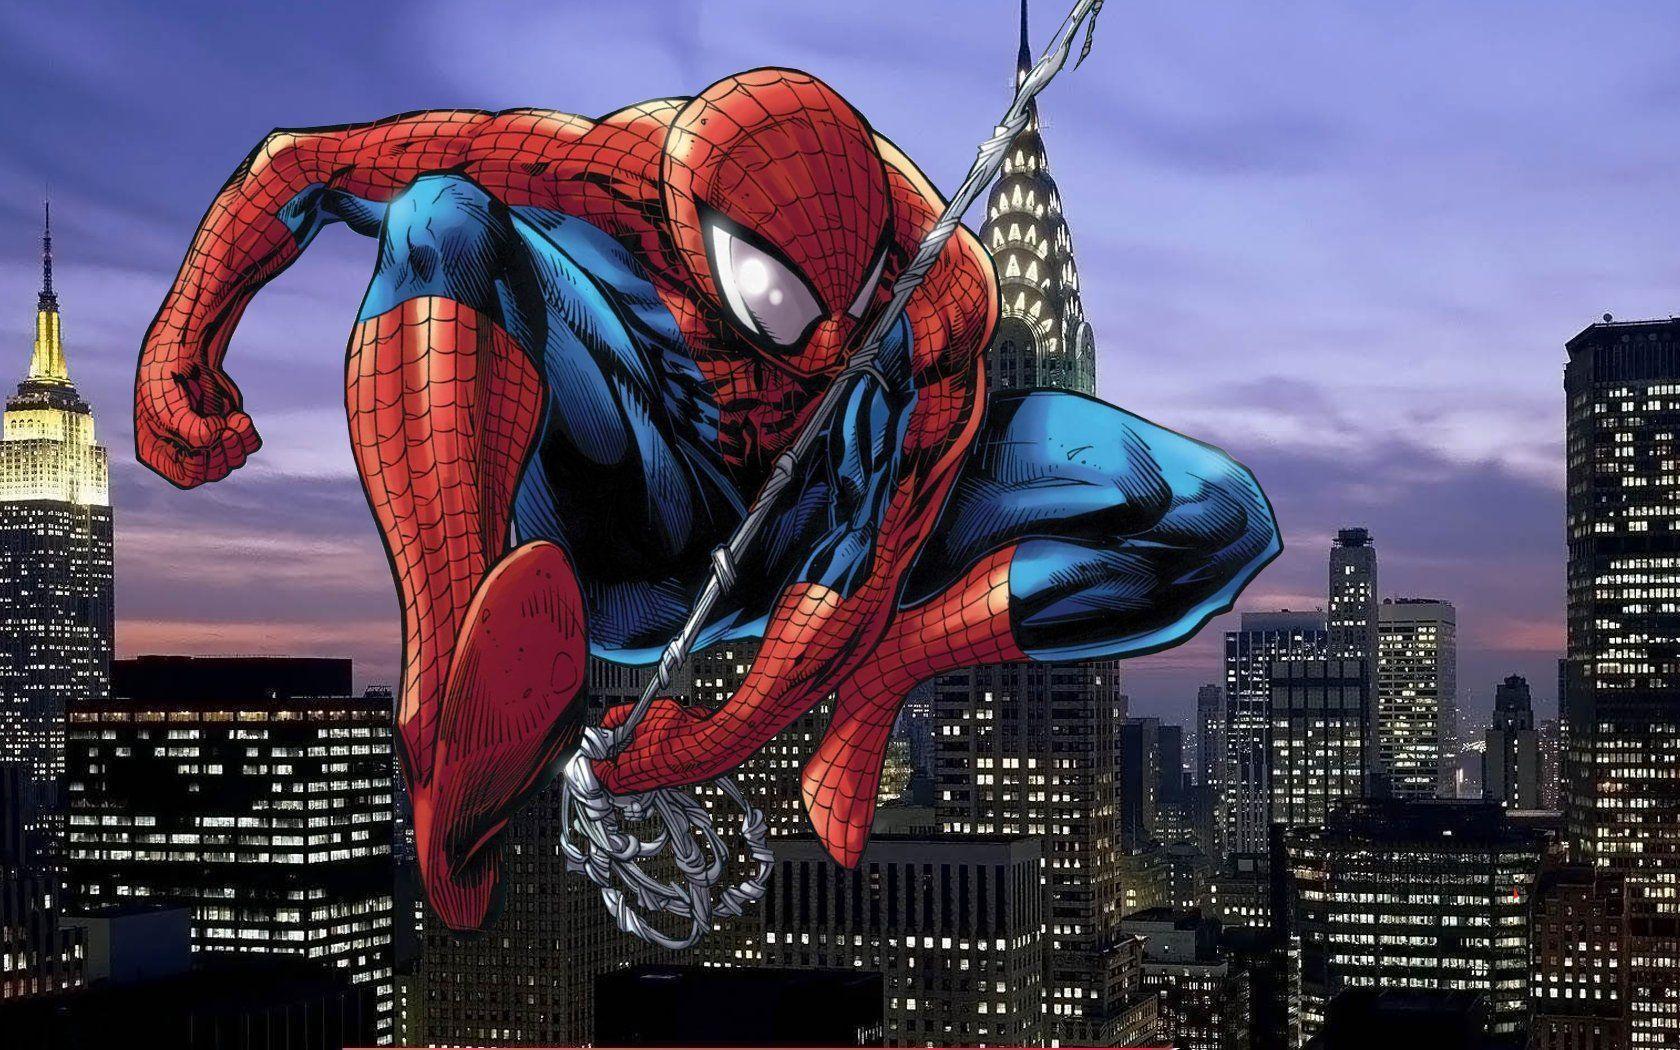 Spiderman 2014 New Image Full HD Wallpaper